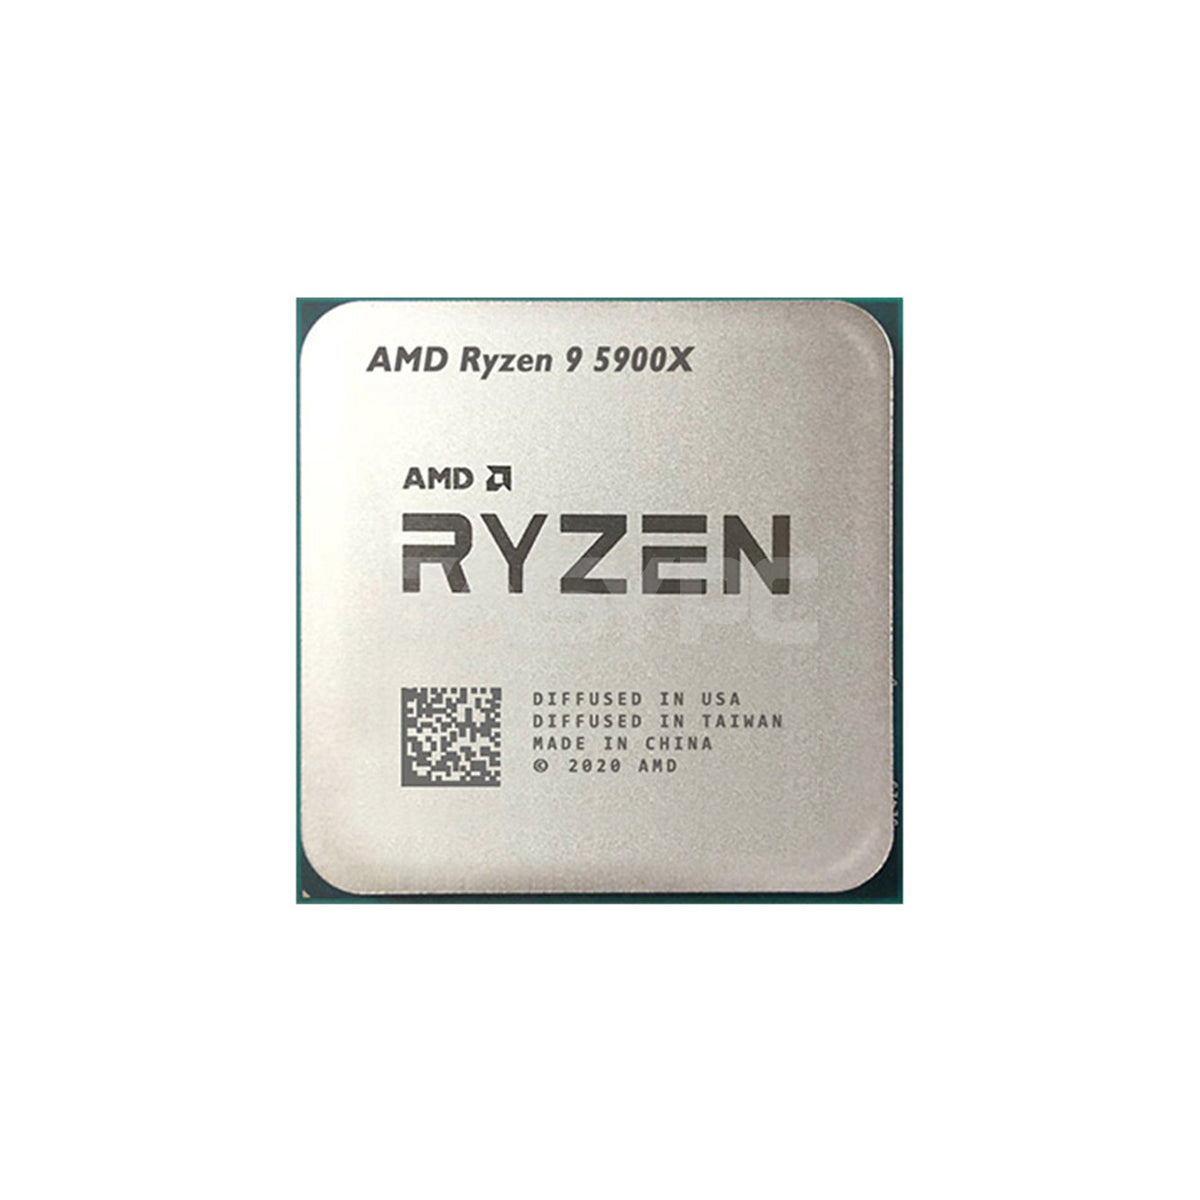 AMD Ryzen 9 5900X Socket AM4 3.7GHz Processor-c